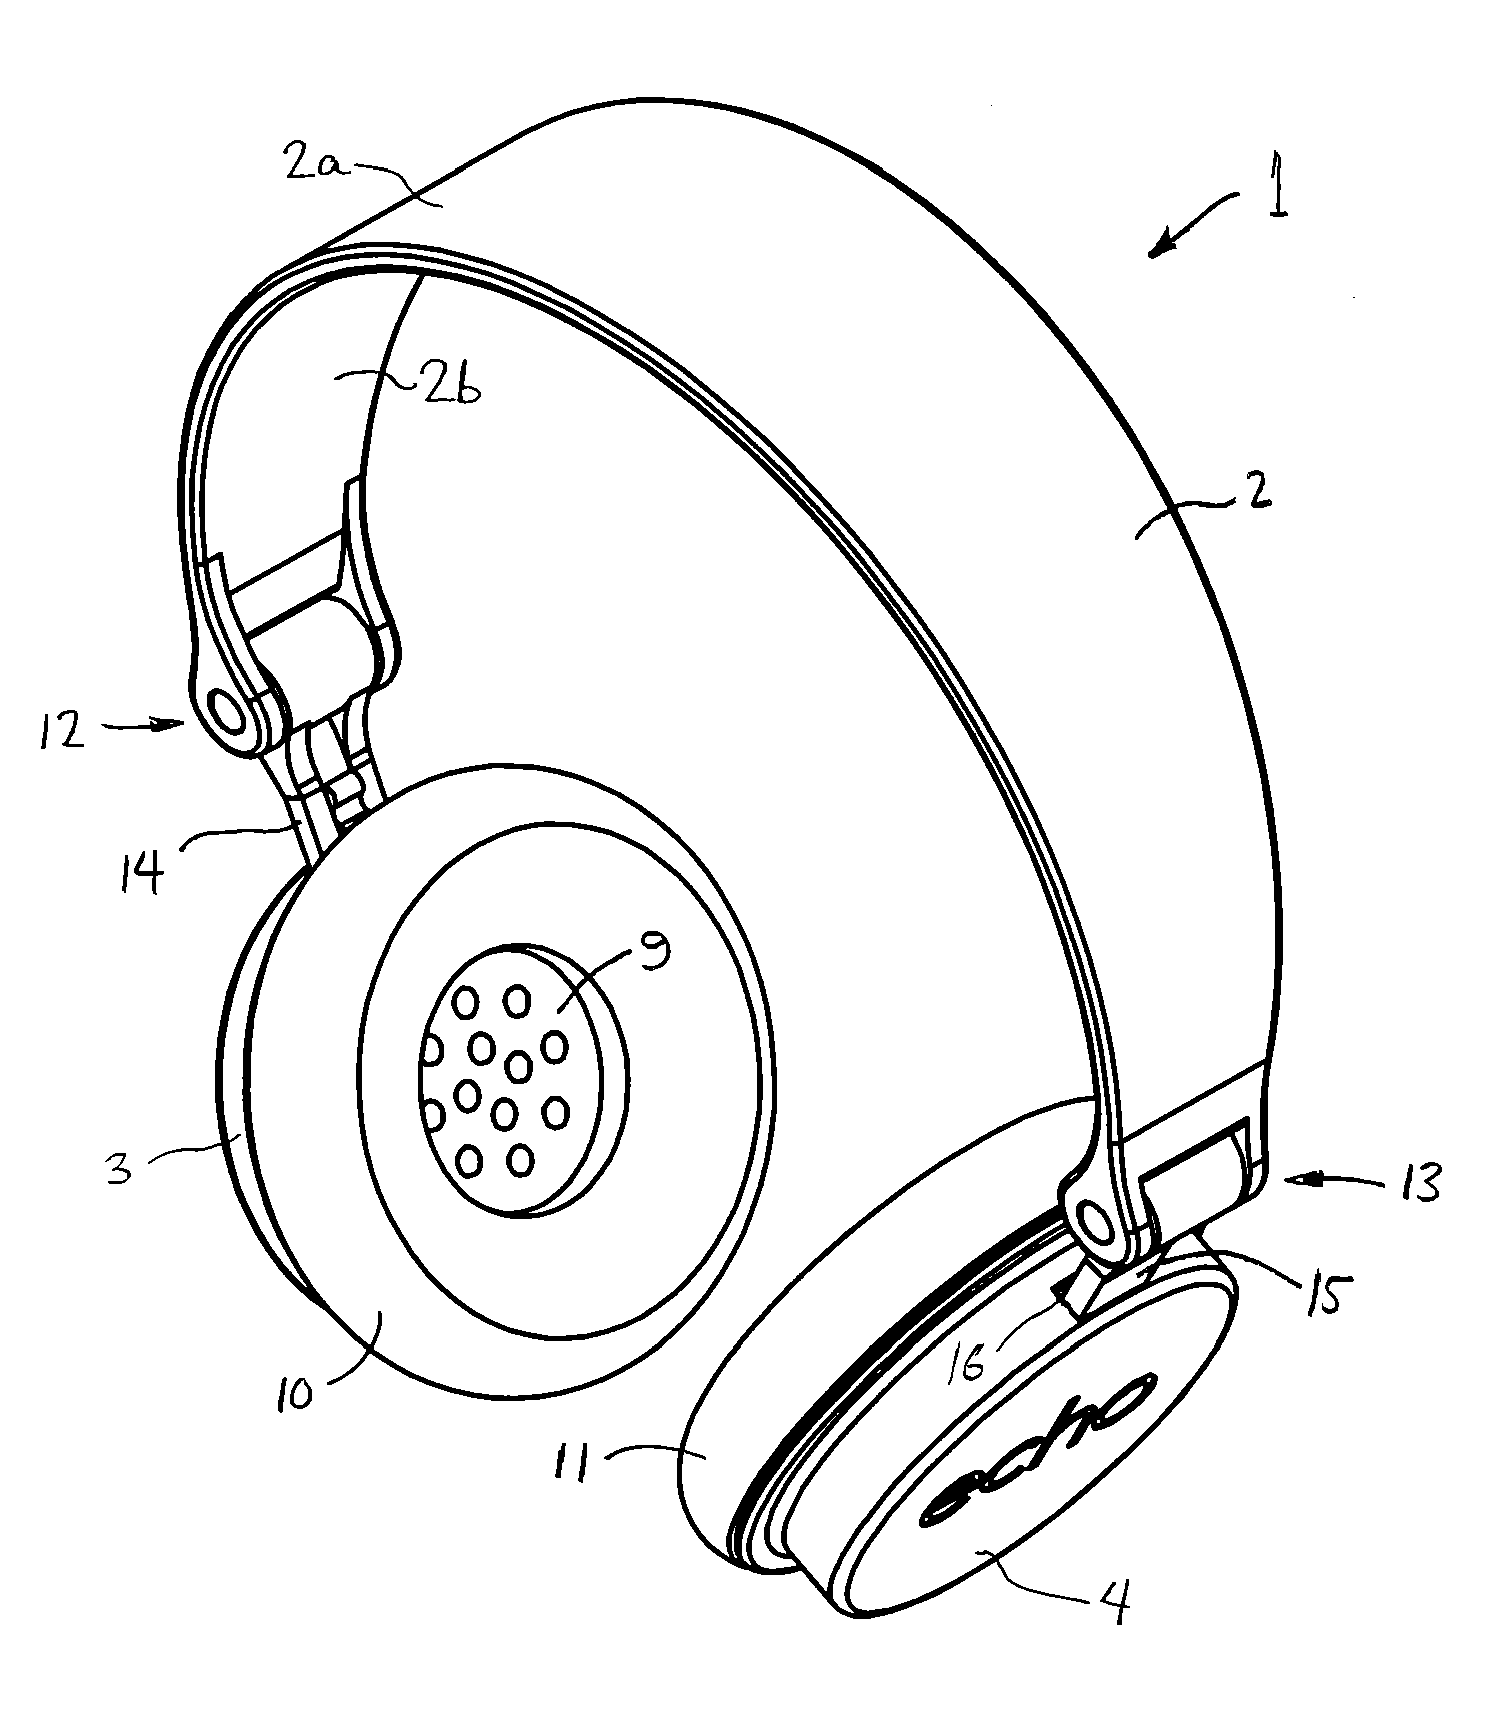 Adjustable and convertible audio headphones